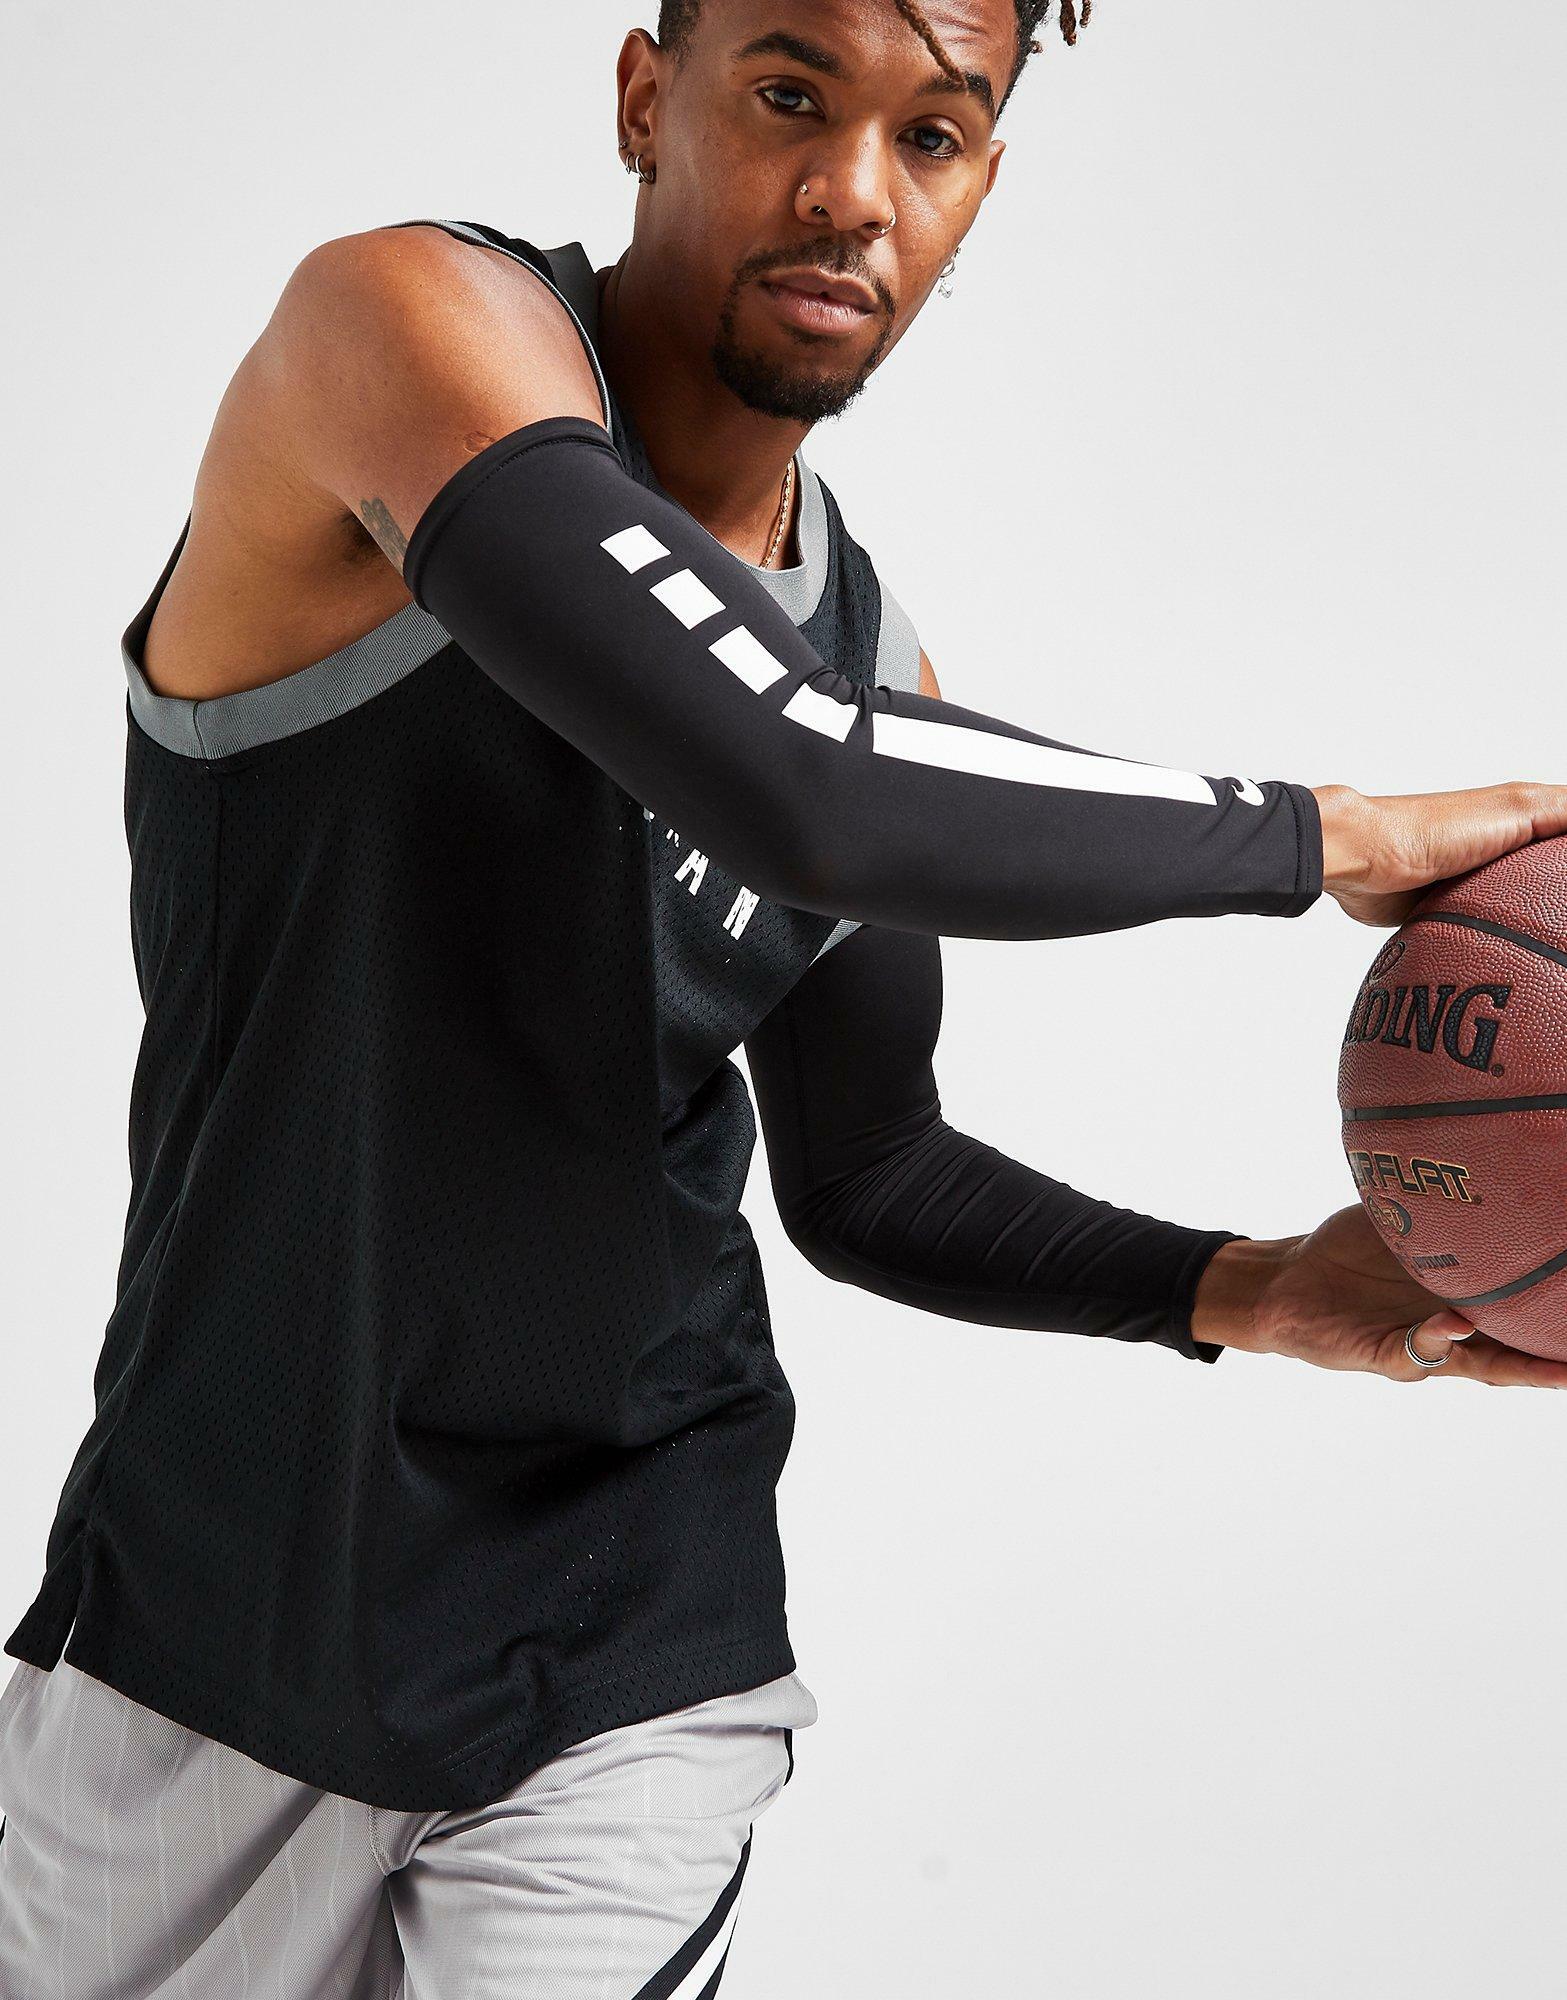 Nike Pro Elite Sleeves 2.0